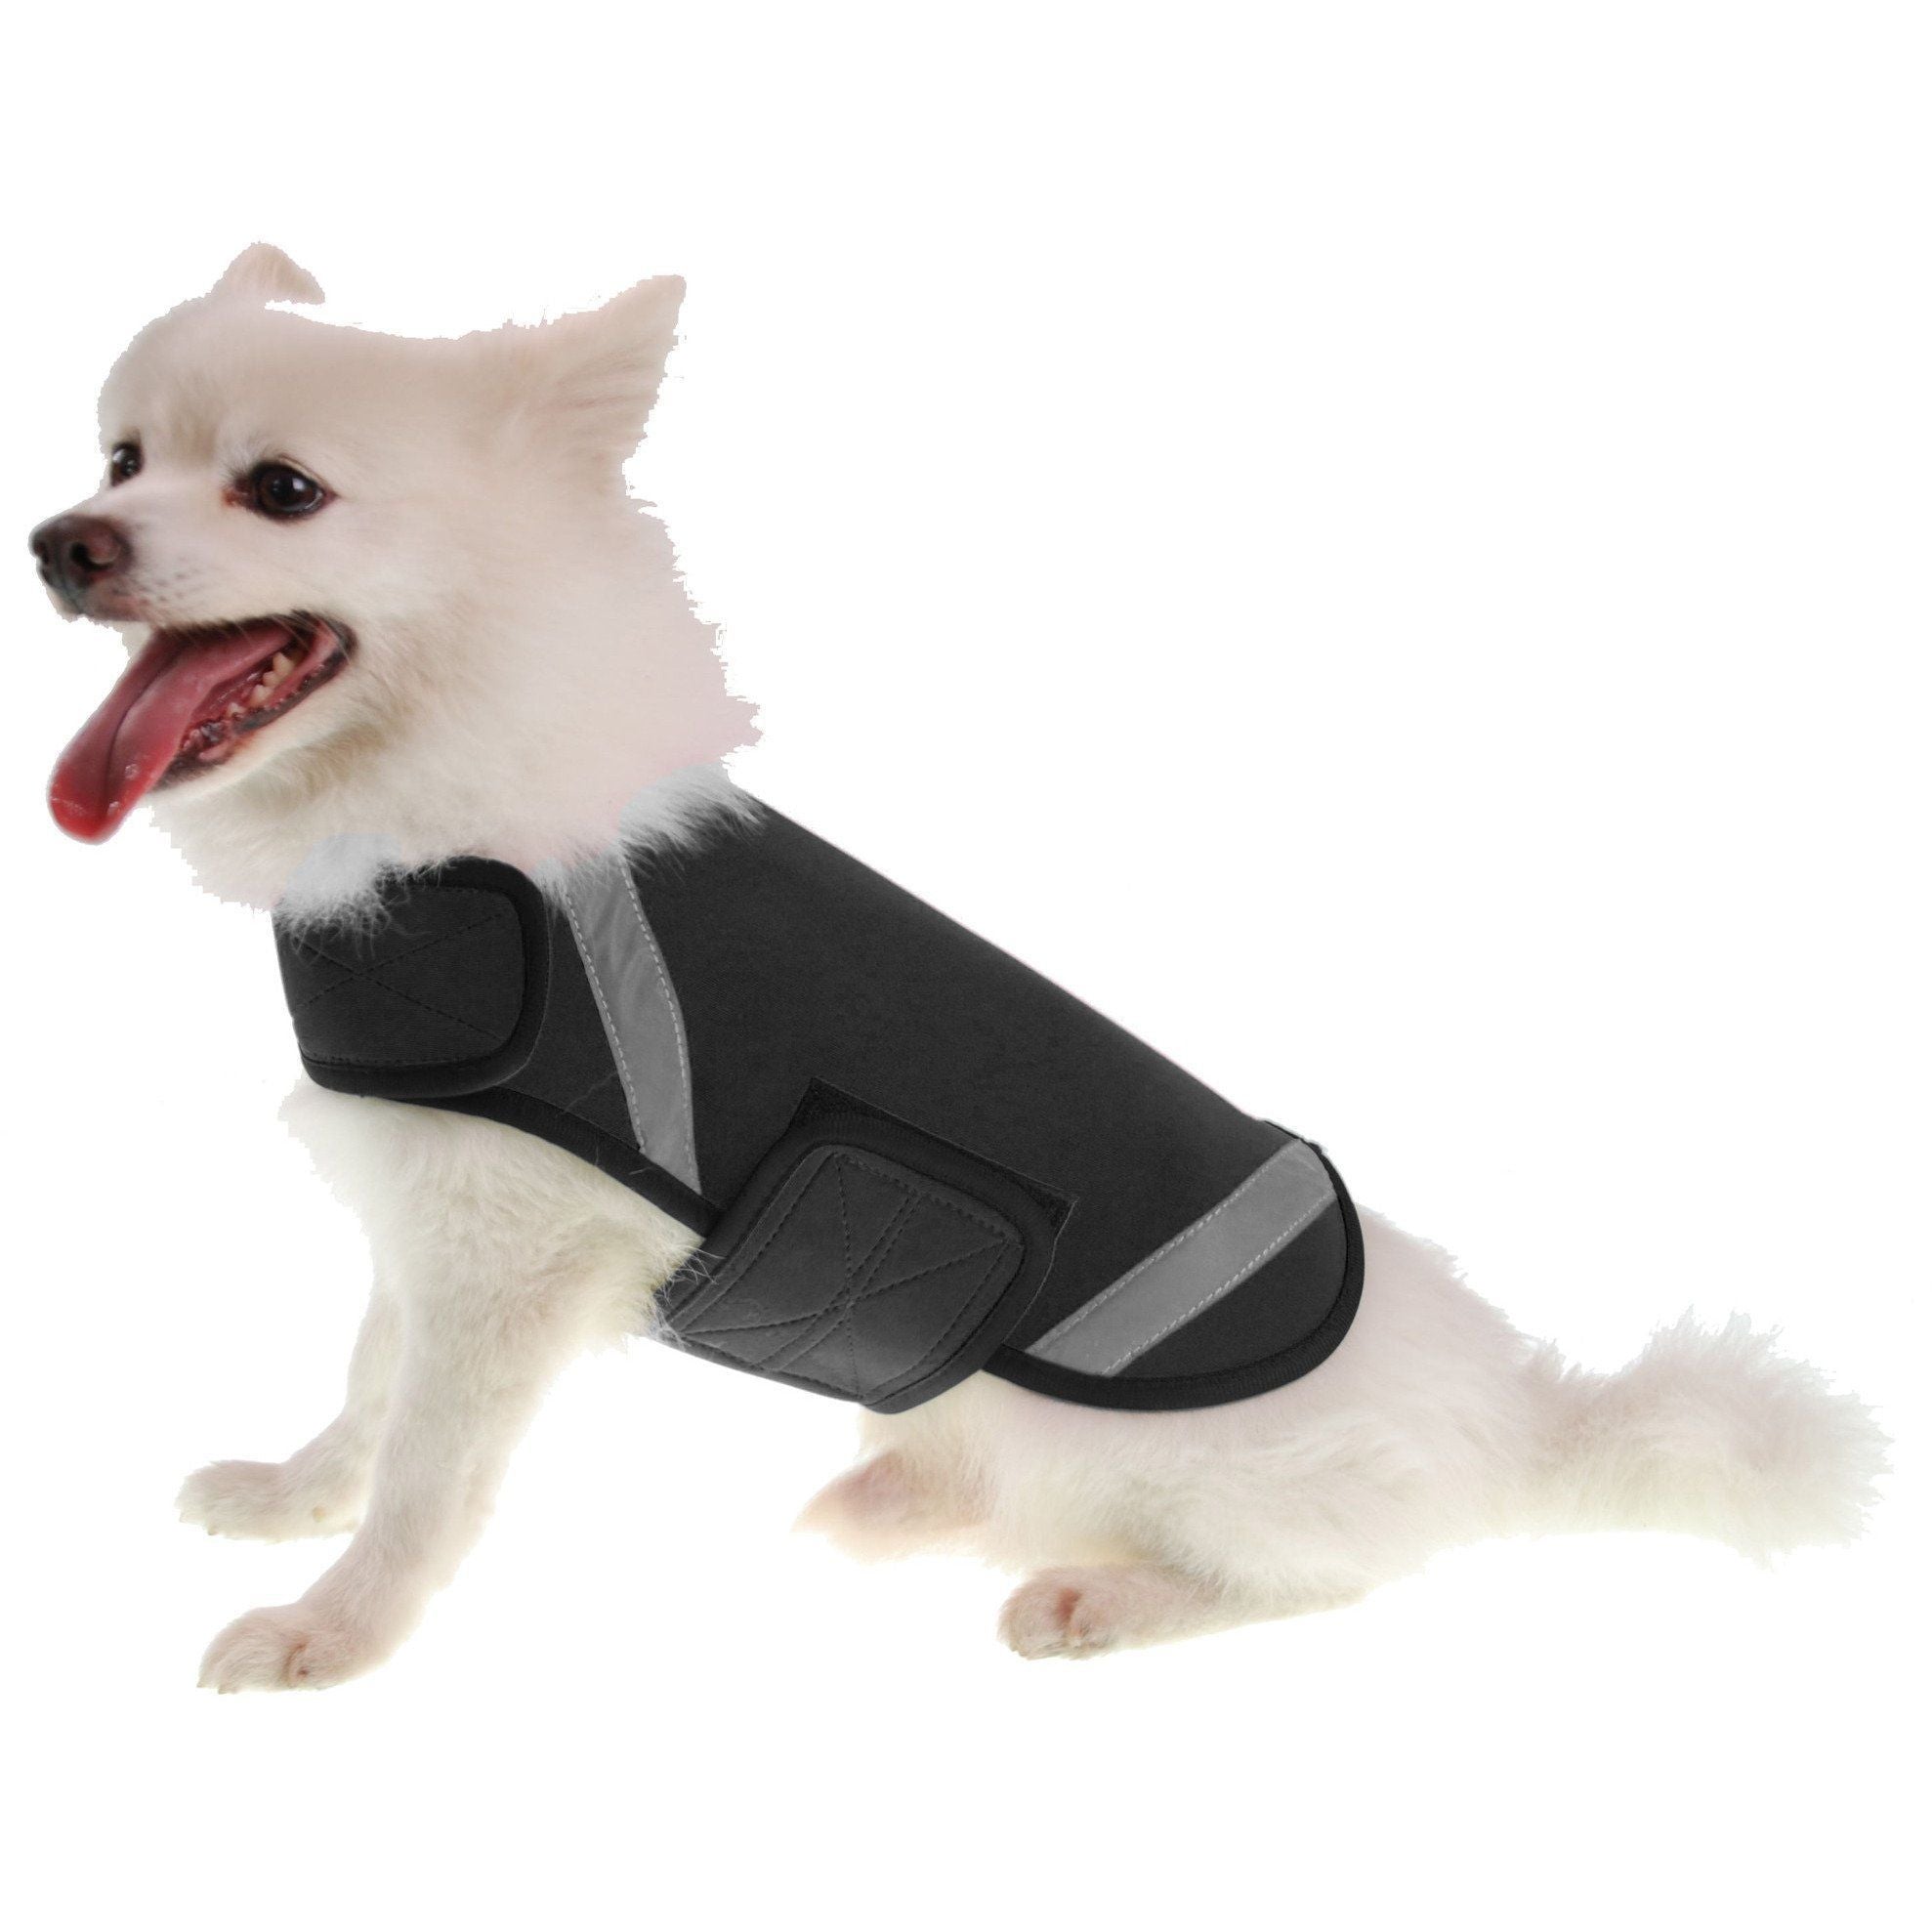 Pet Life ® 'Extreme Neoprene' Multi-Purpose Protective and Reflective Rash Guard Dog Coat X-Small Black